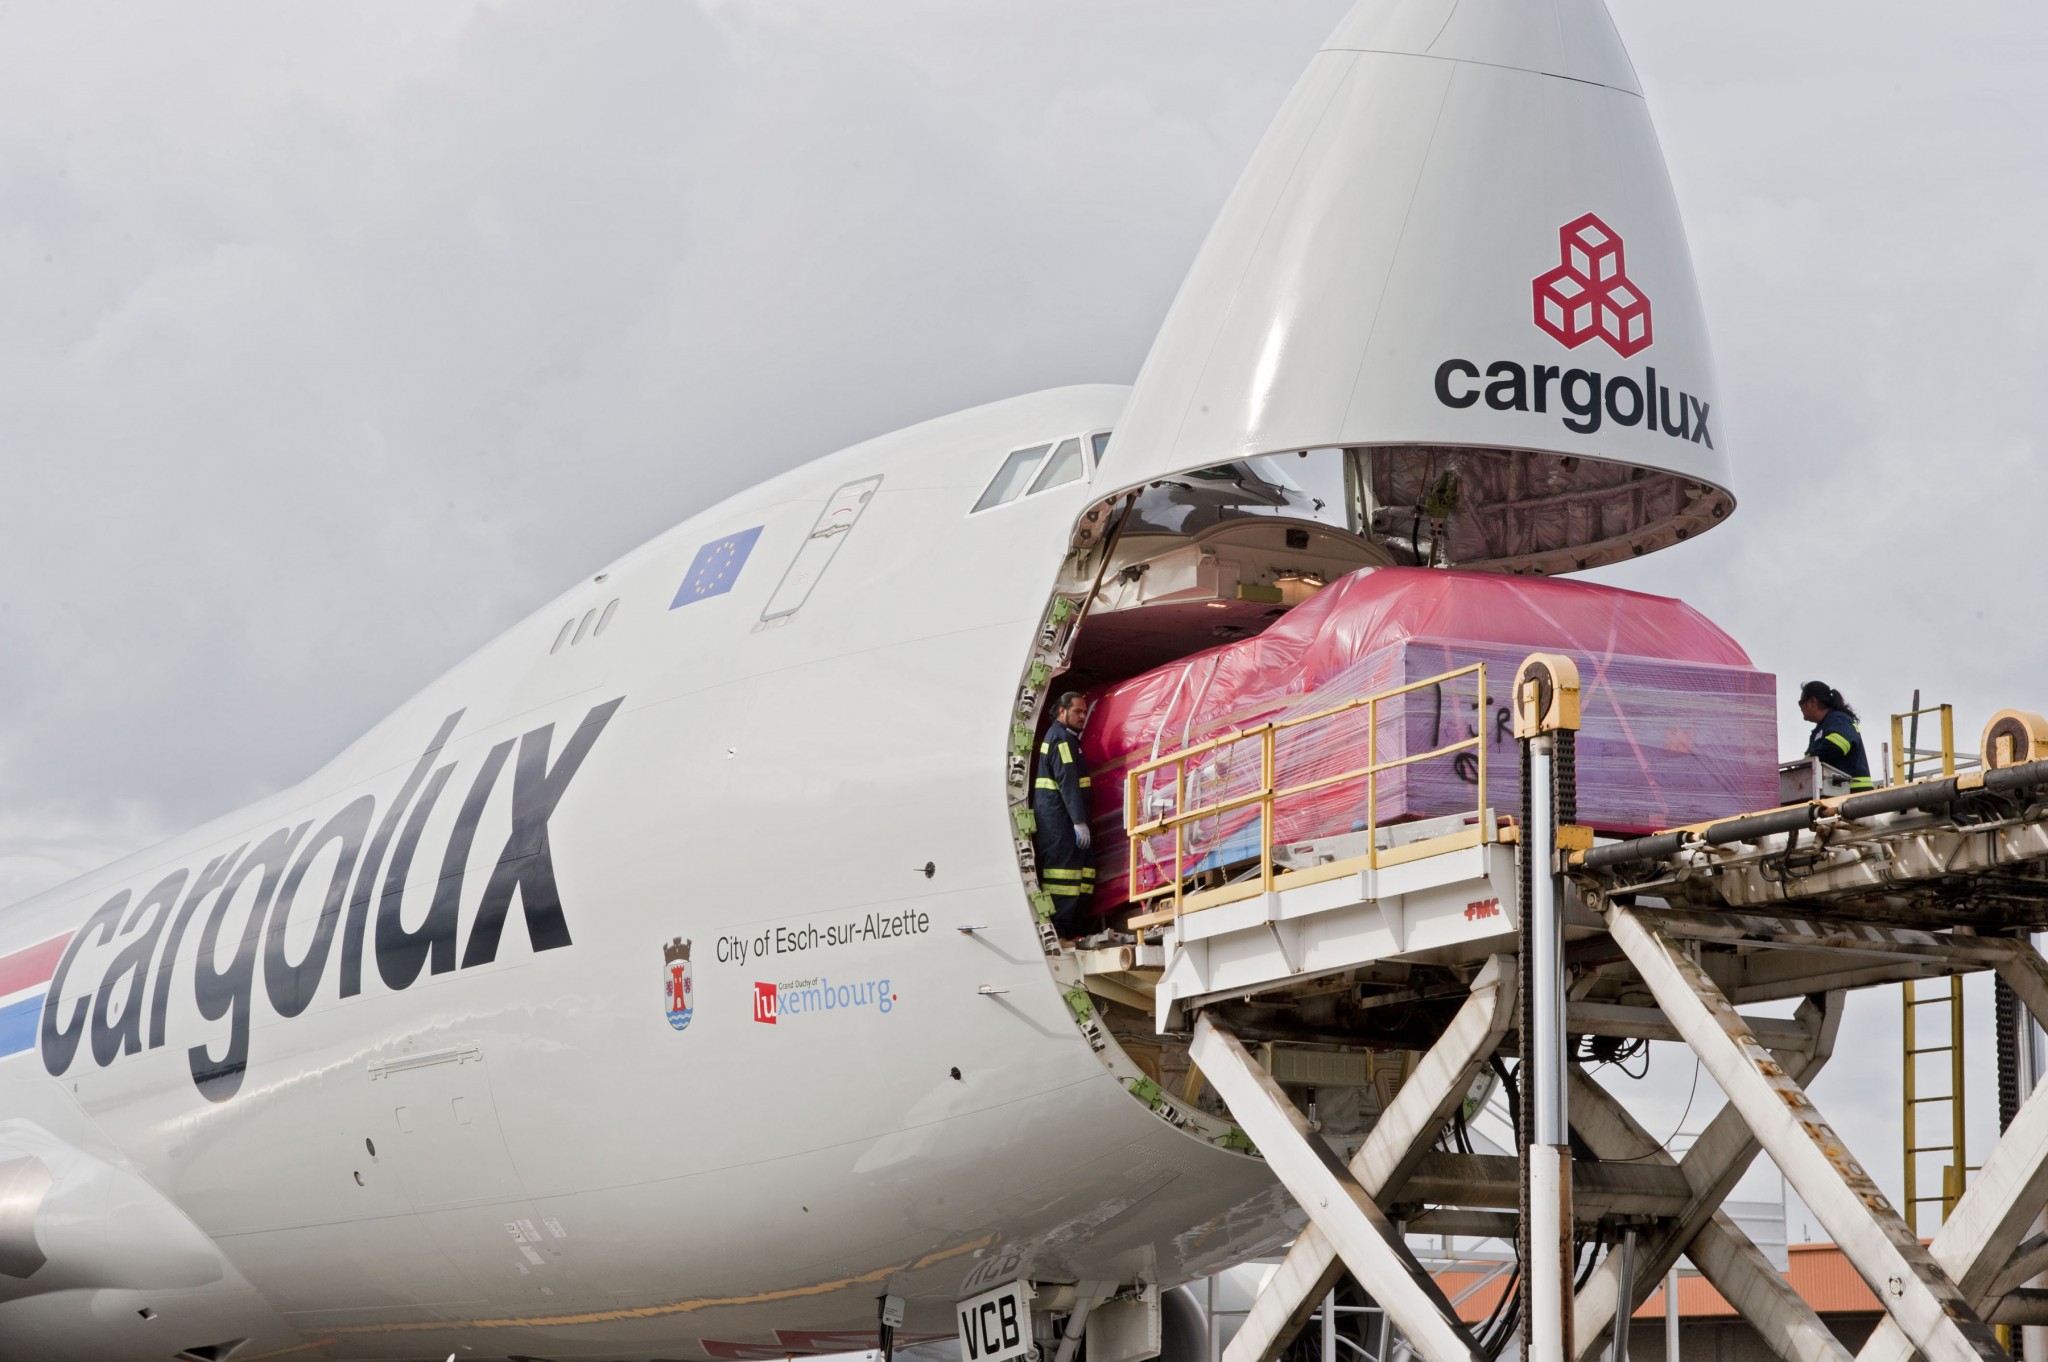 KfW IPEX-Bank finances 747 for Cargolux